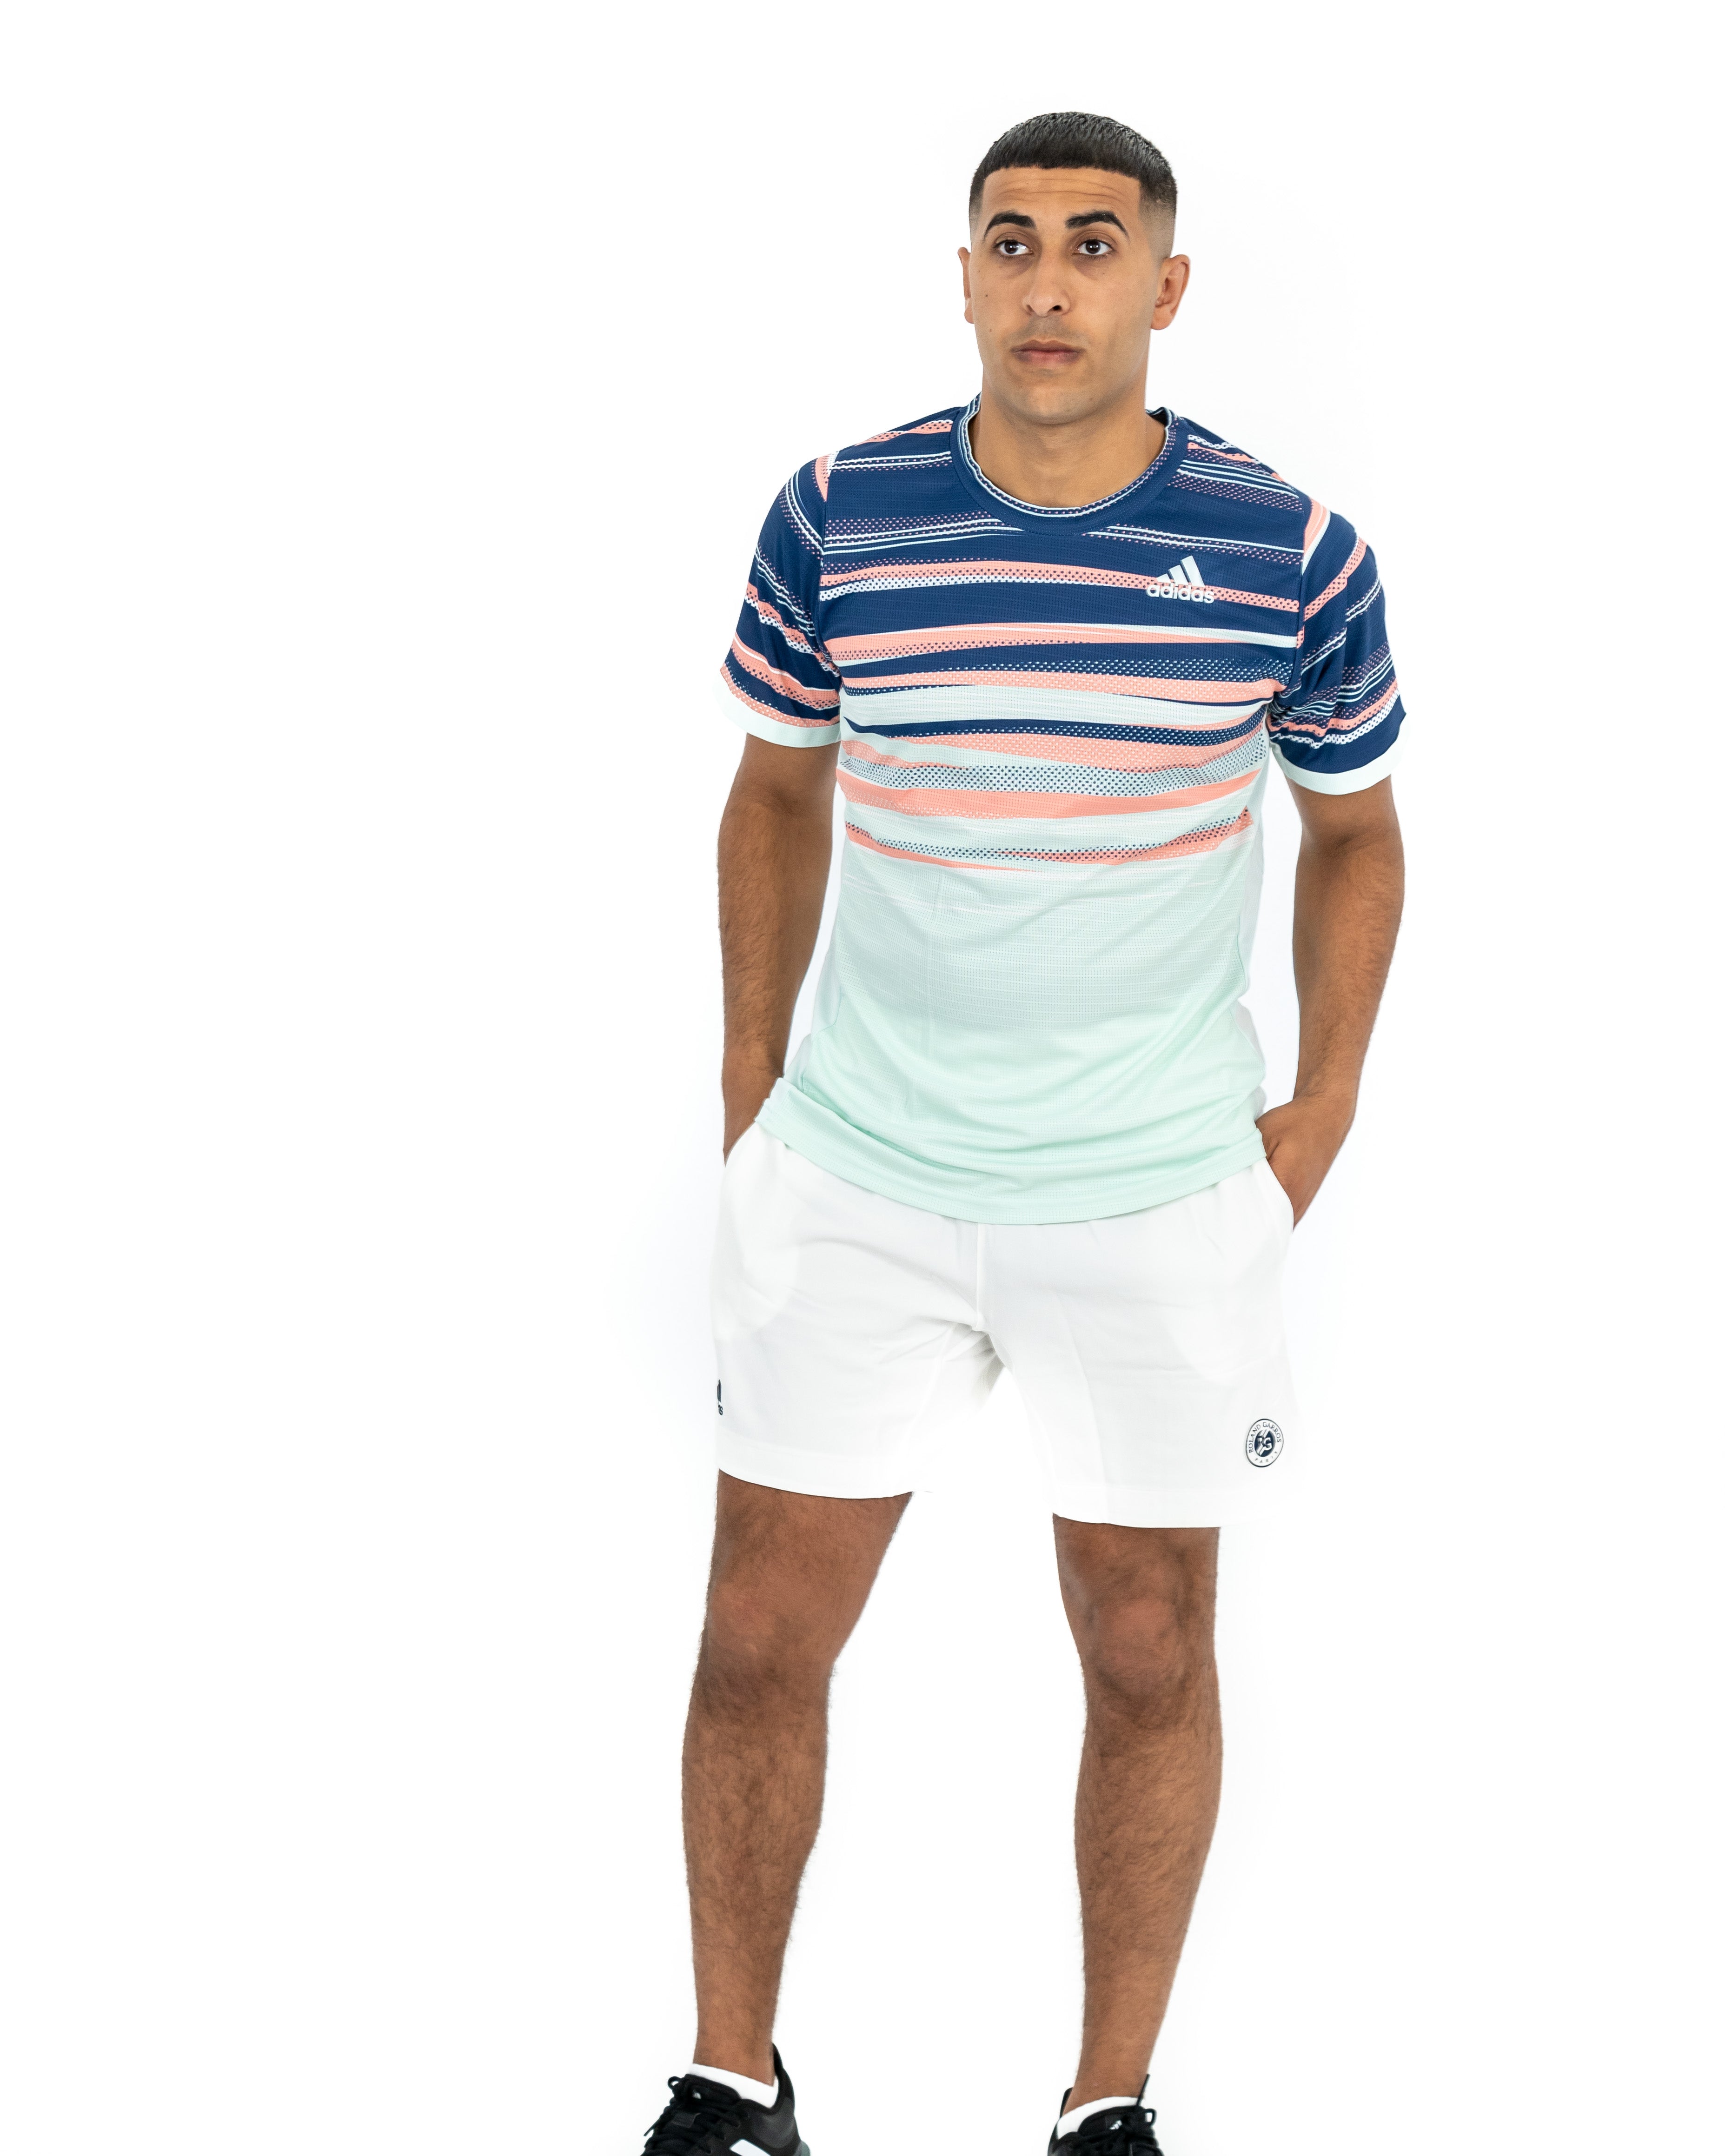 Adidas Roland Garros Shorts